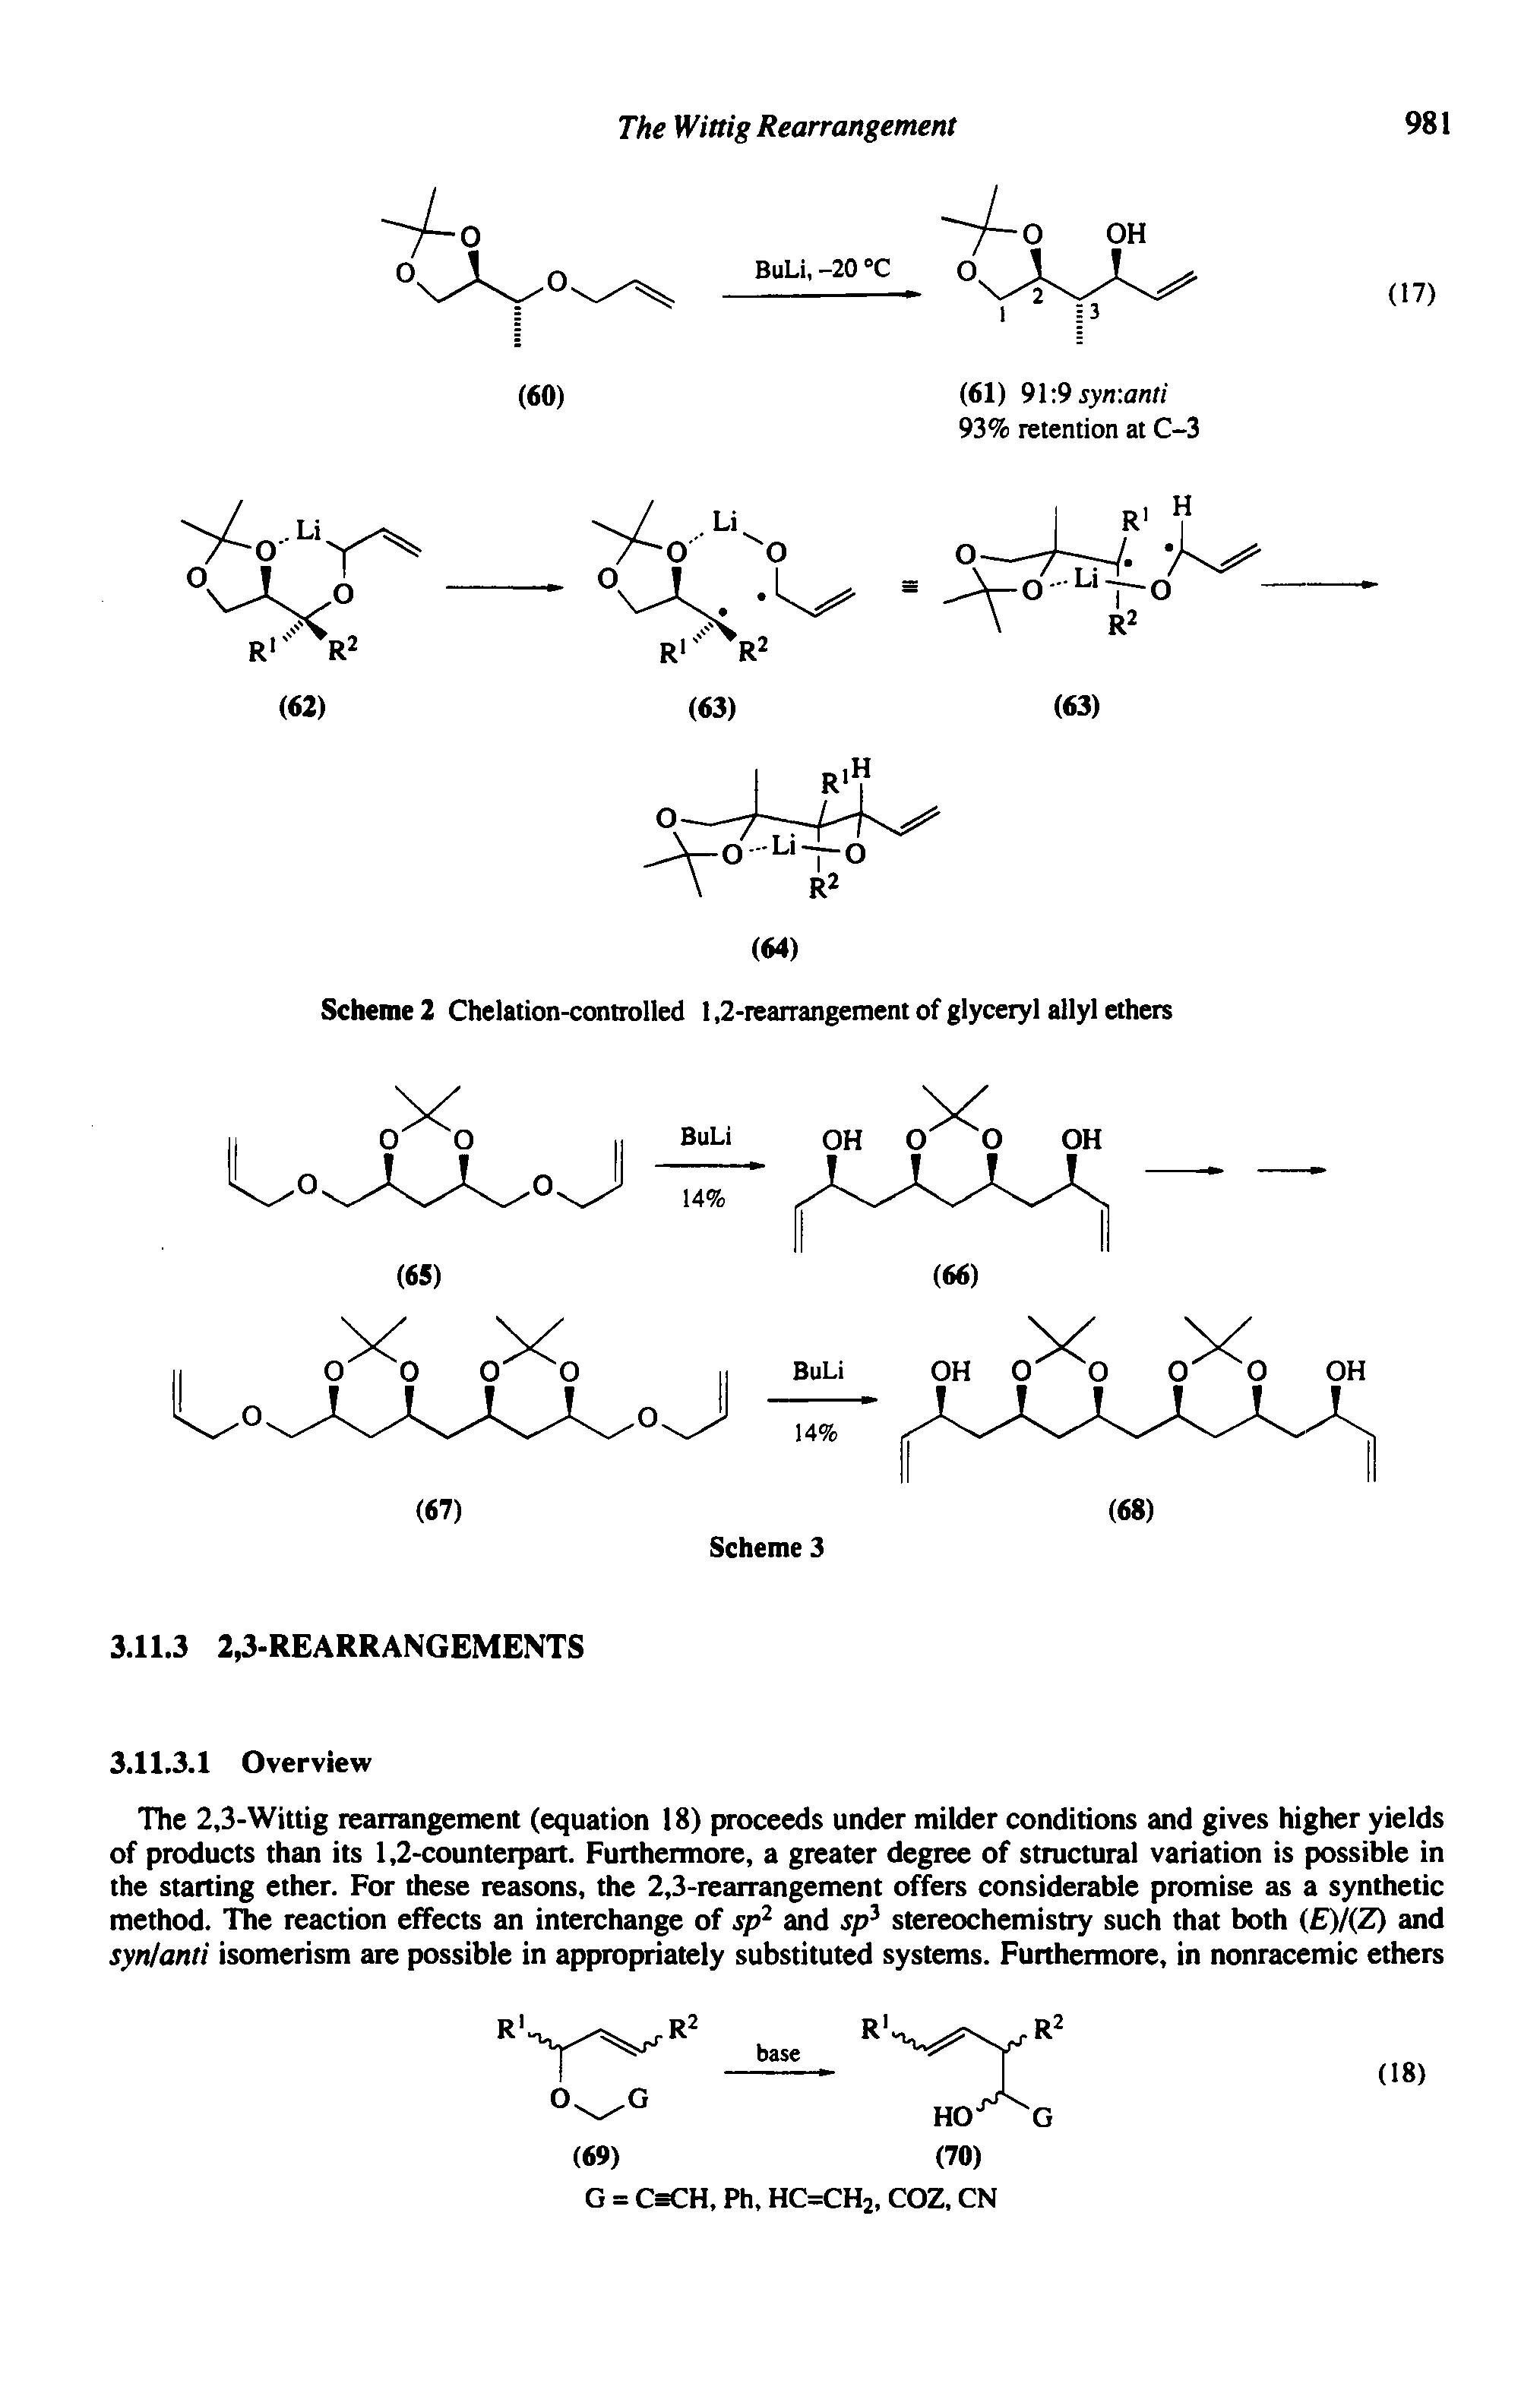 Scheme 2 Chelation-controlled 1,2-rearrangement of glyceryl allyl ethers...